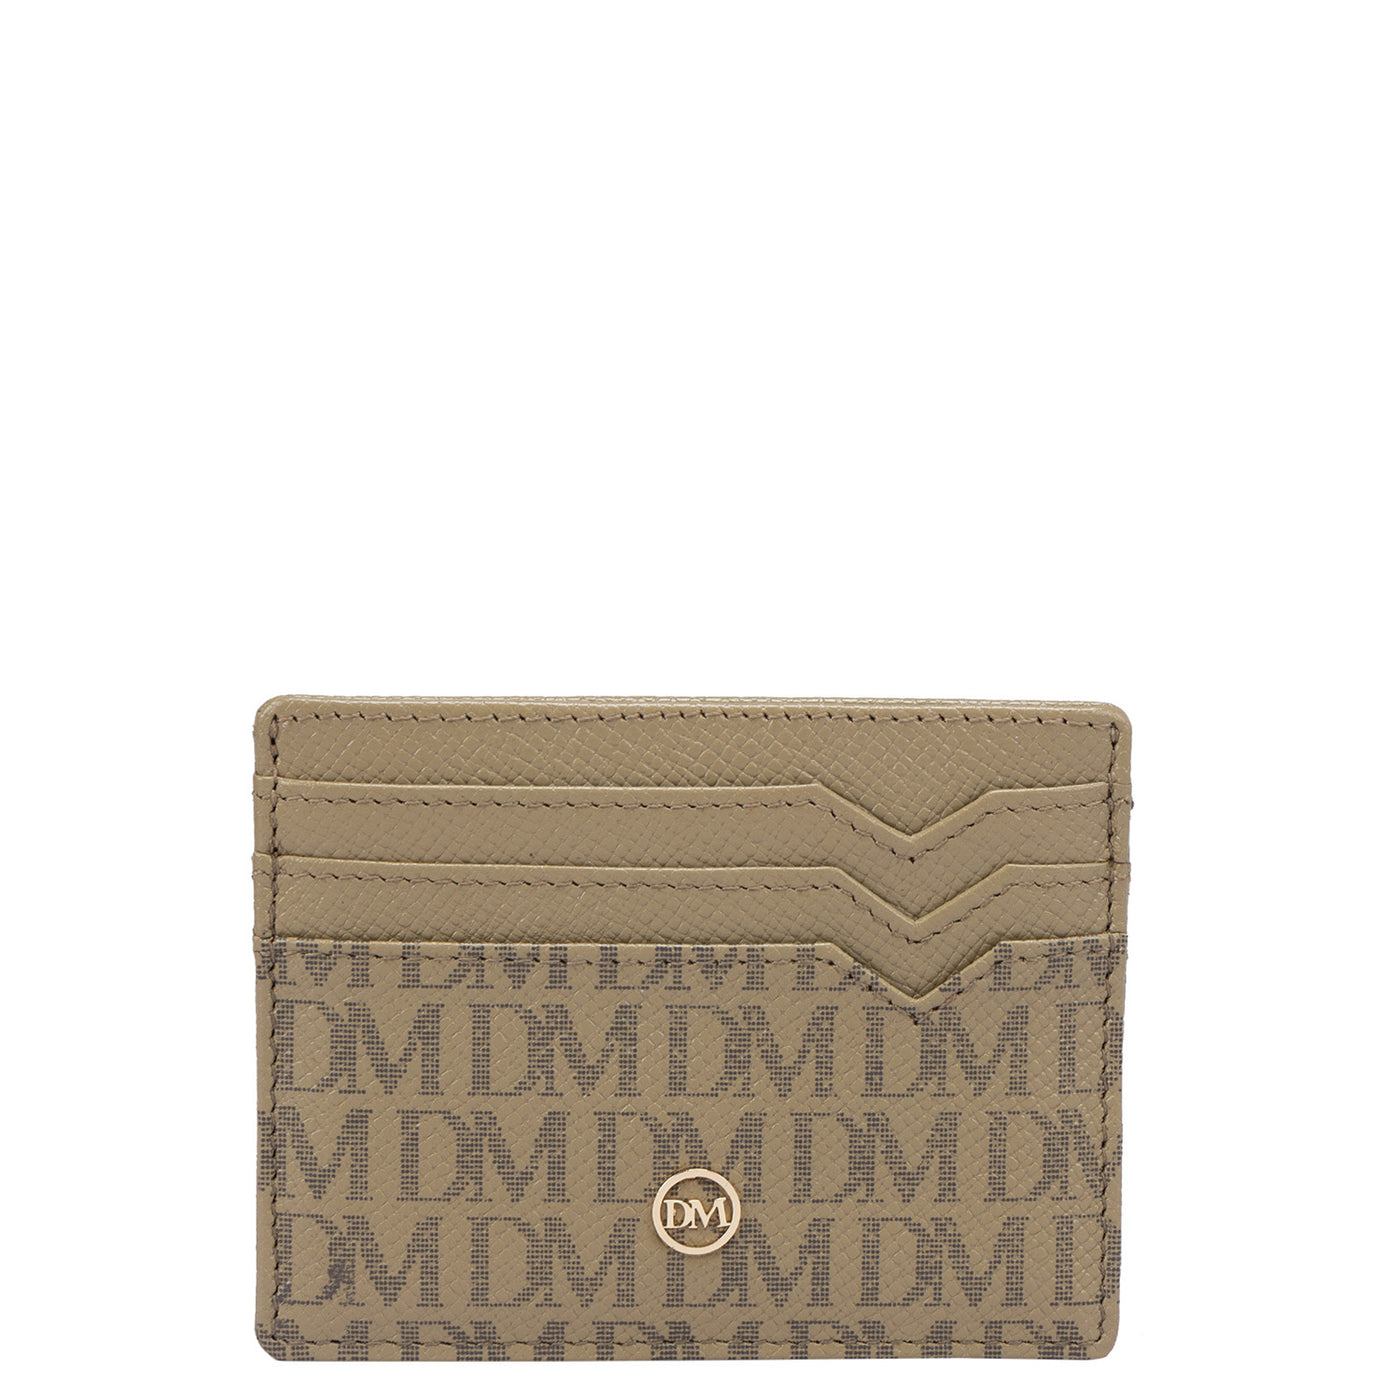 Franzy Monogram Leather Card Case - Turtle